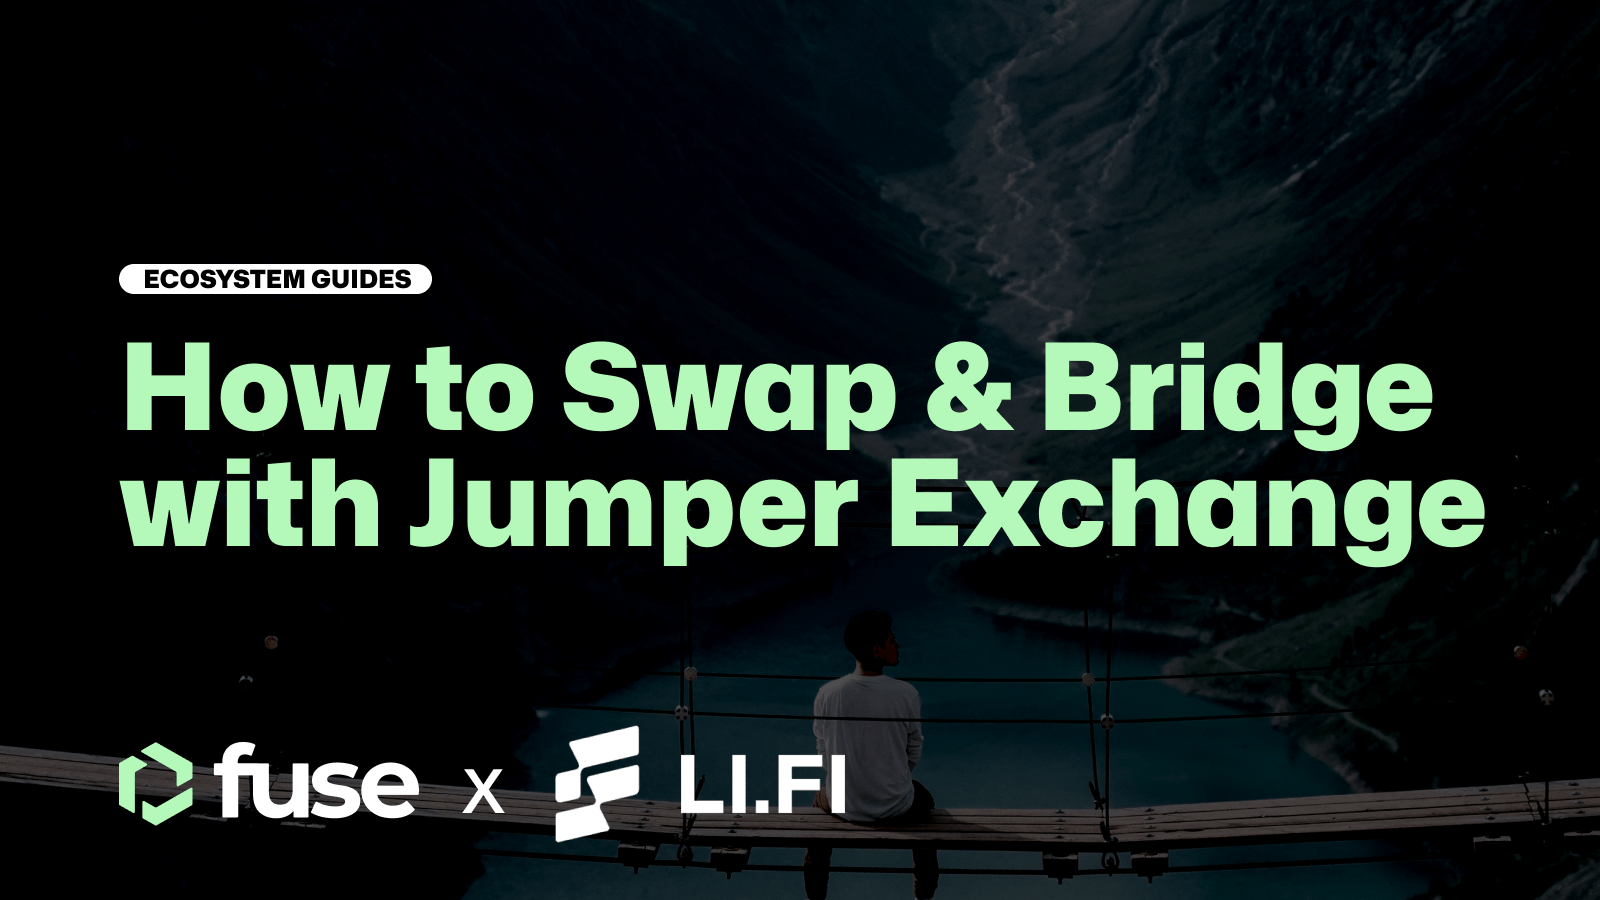 Jumper Exchange